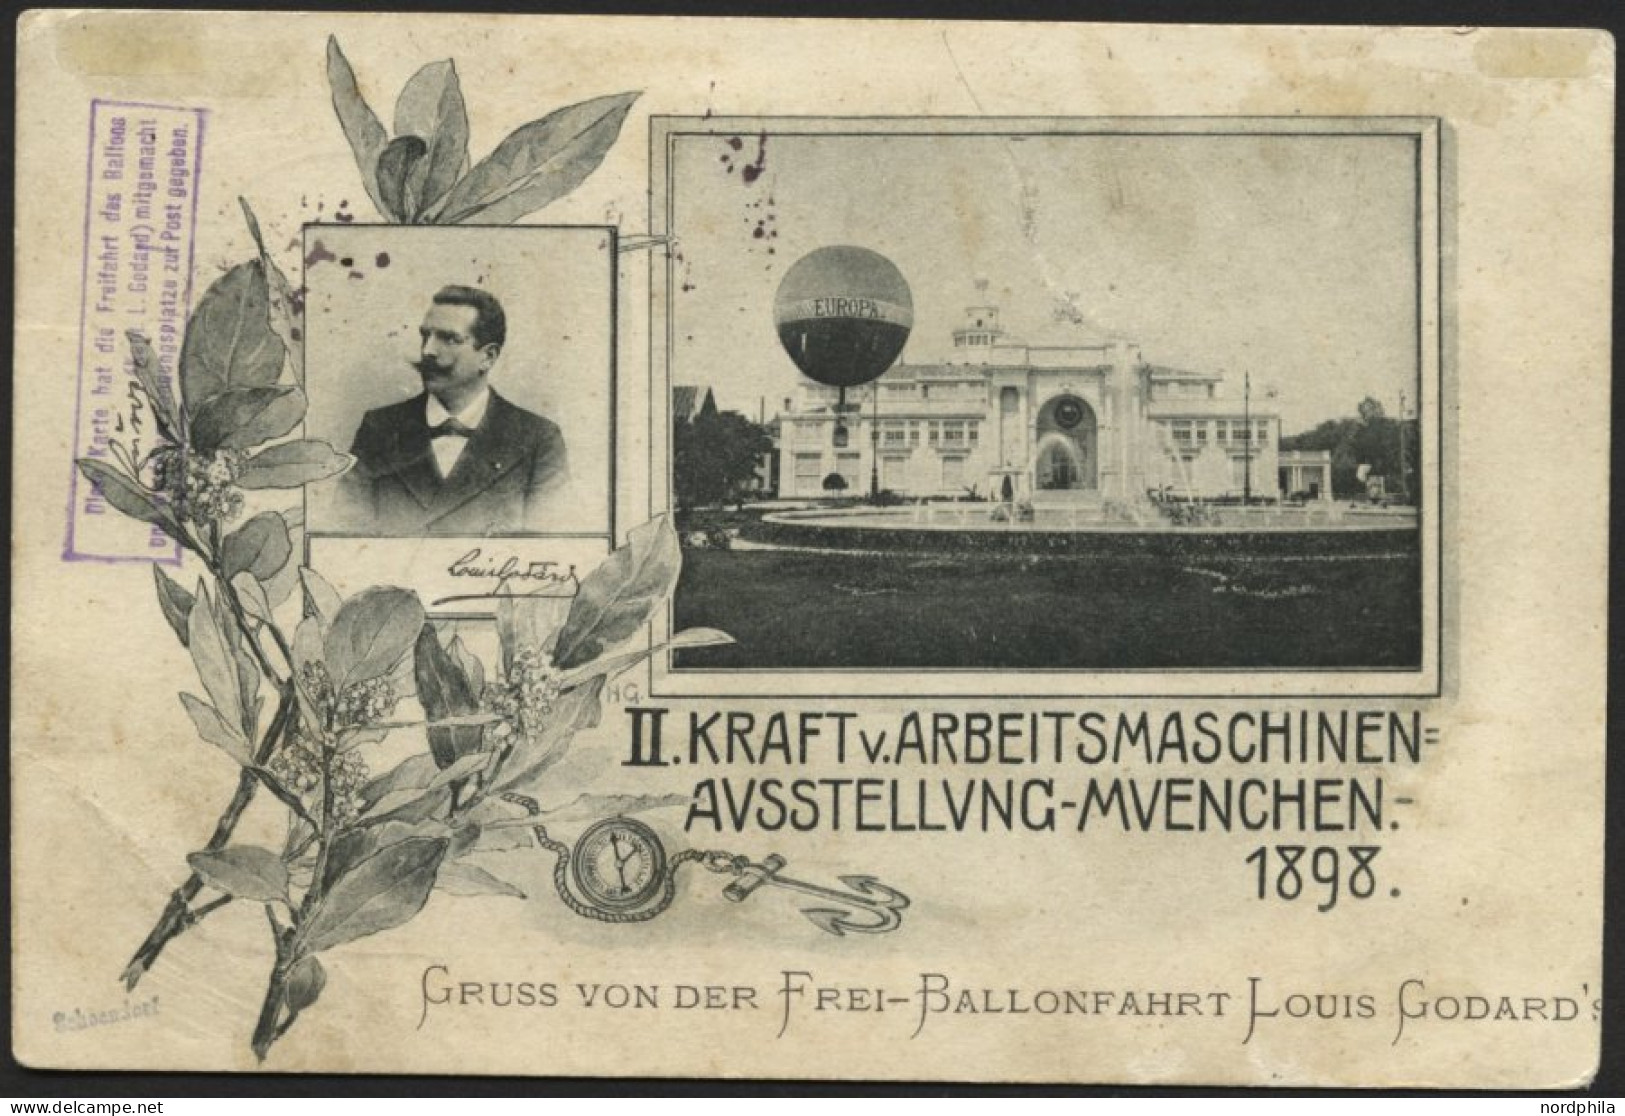 BALLON-FAHRTEN 1897-1916 15.8.1898, Freifahrt Des Ballons EUROPA Mit Kapitän Louis Godard, Aufstieg Am 1. Ausstellungsta - Airships